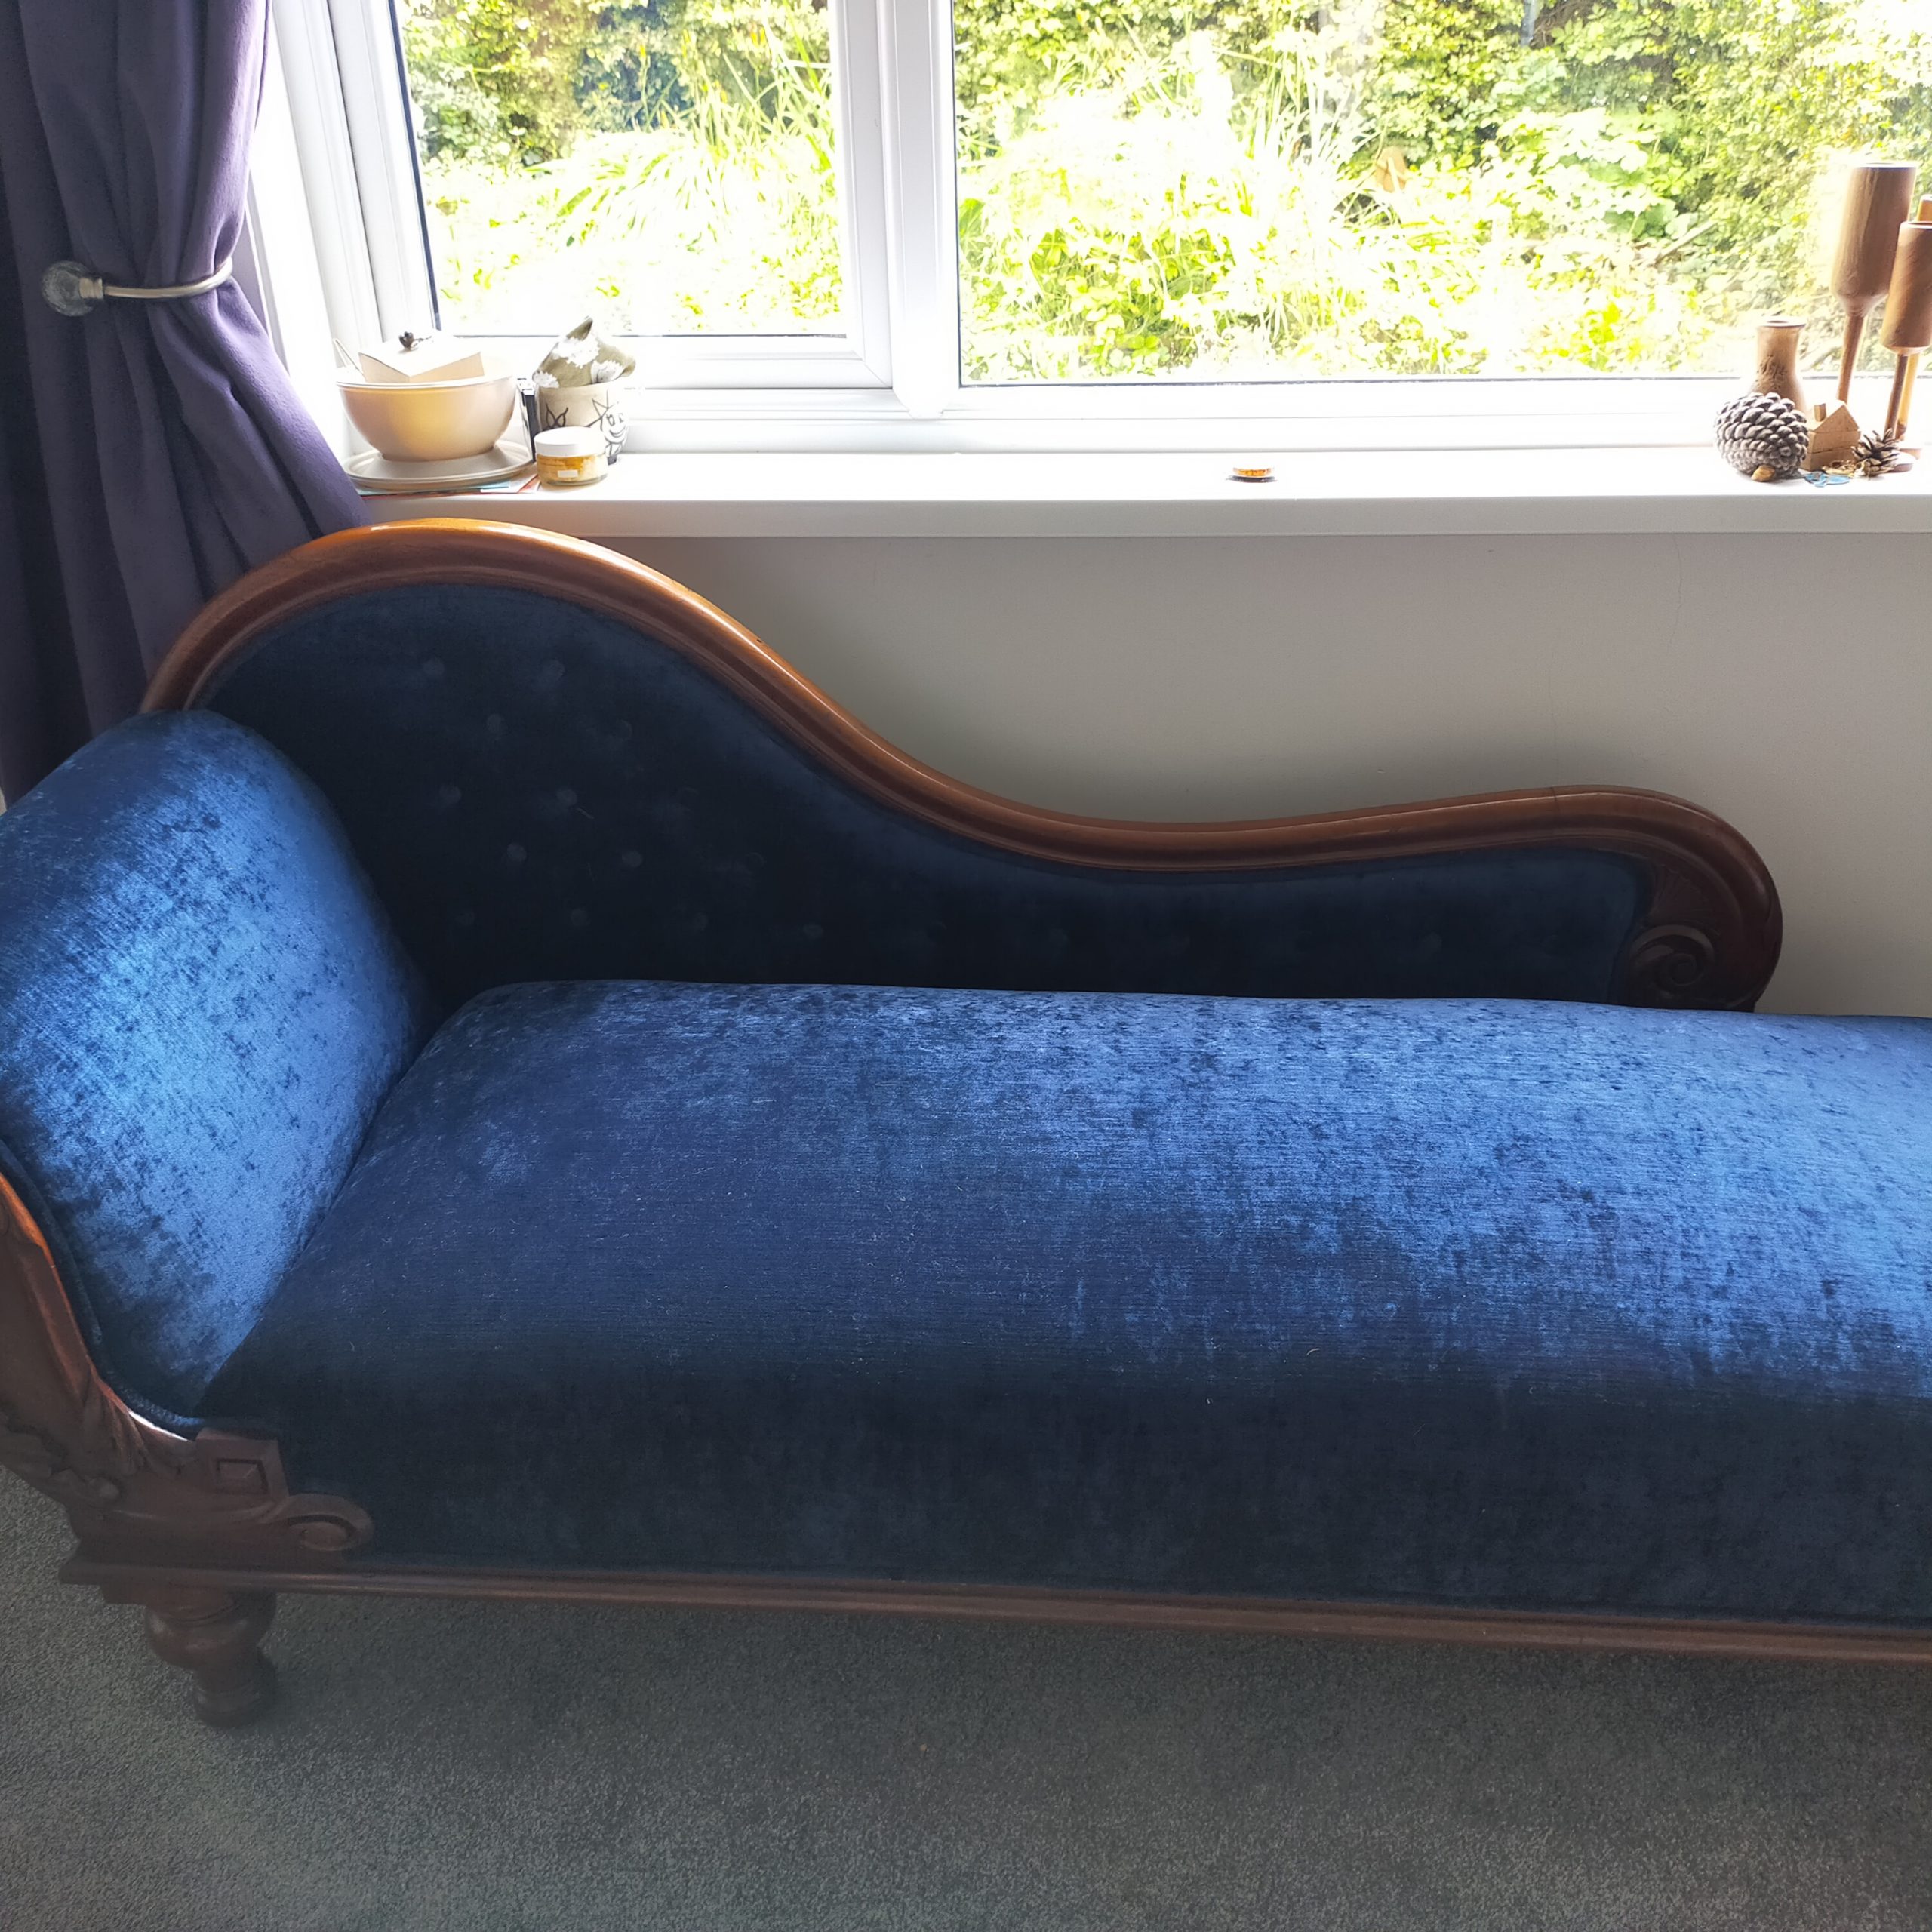 Italian leather aniline armchair after restoration